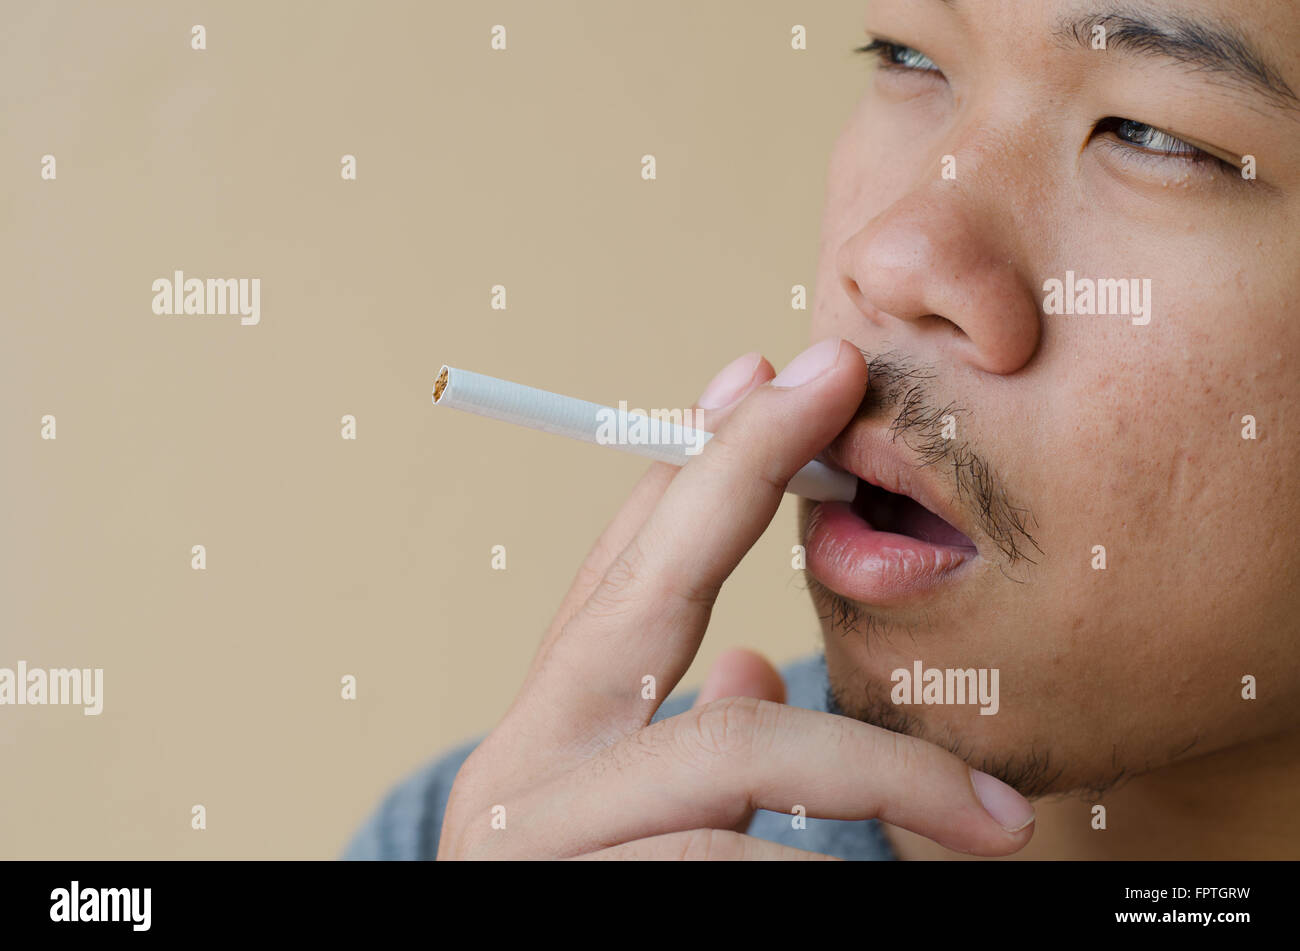 young man smoking a cigarette Stock Photo